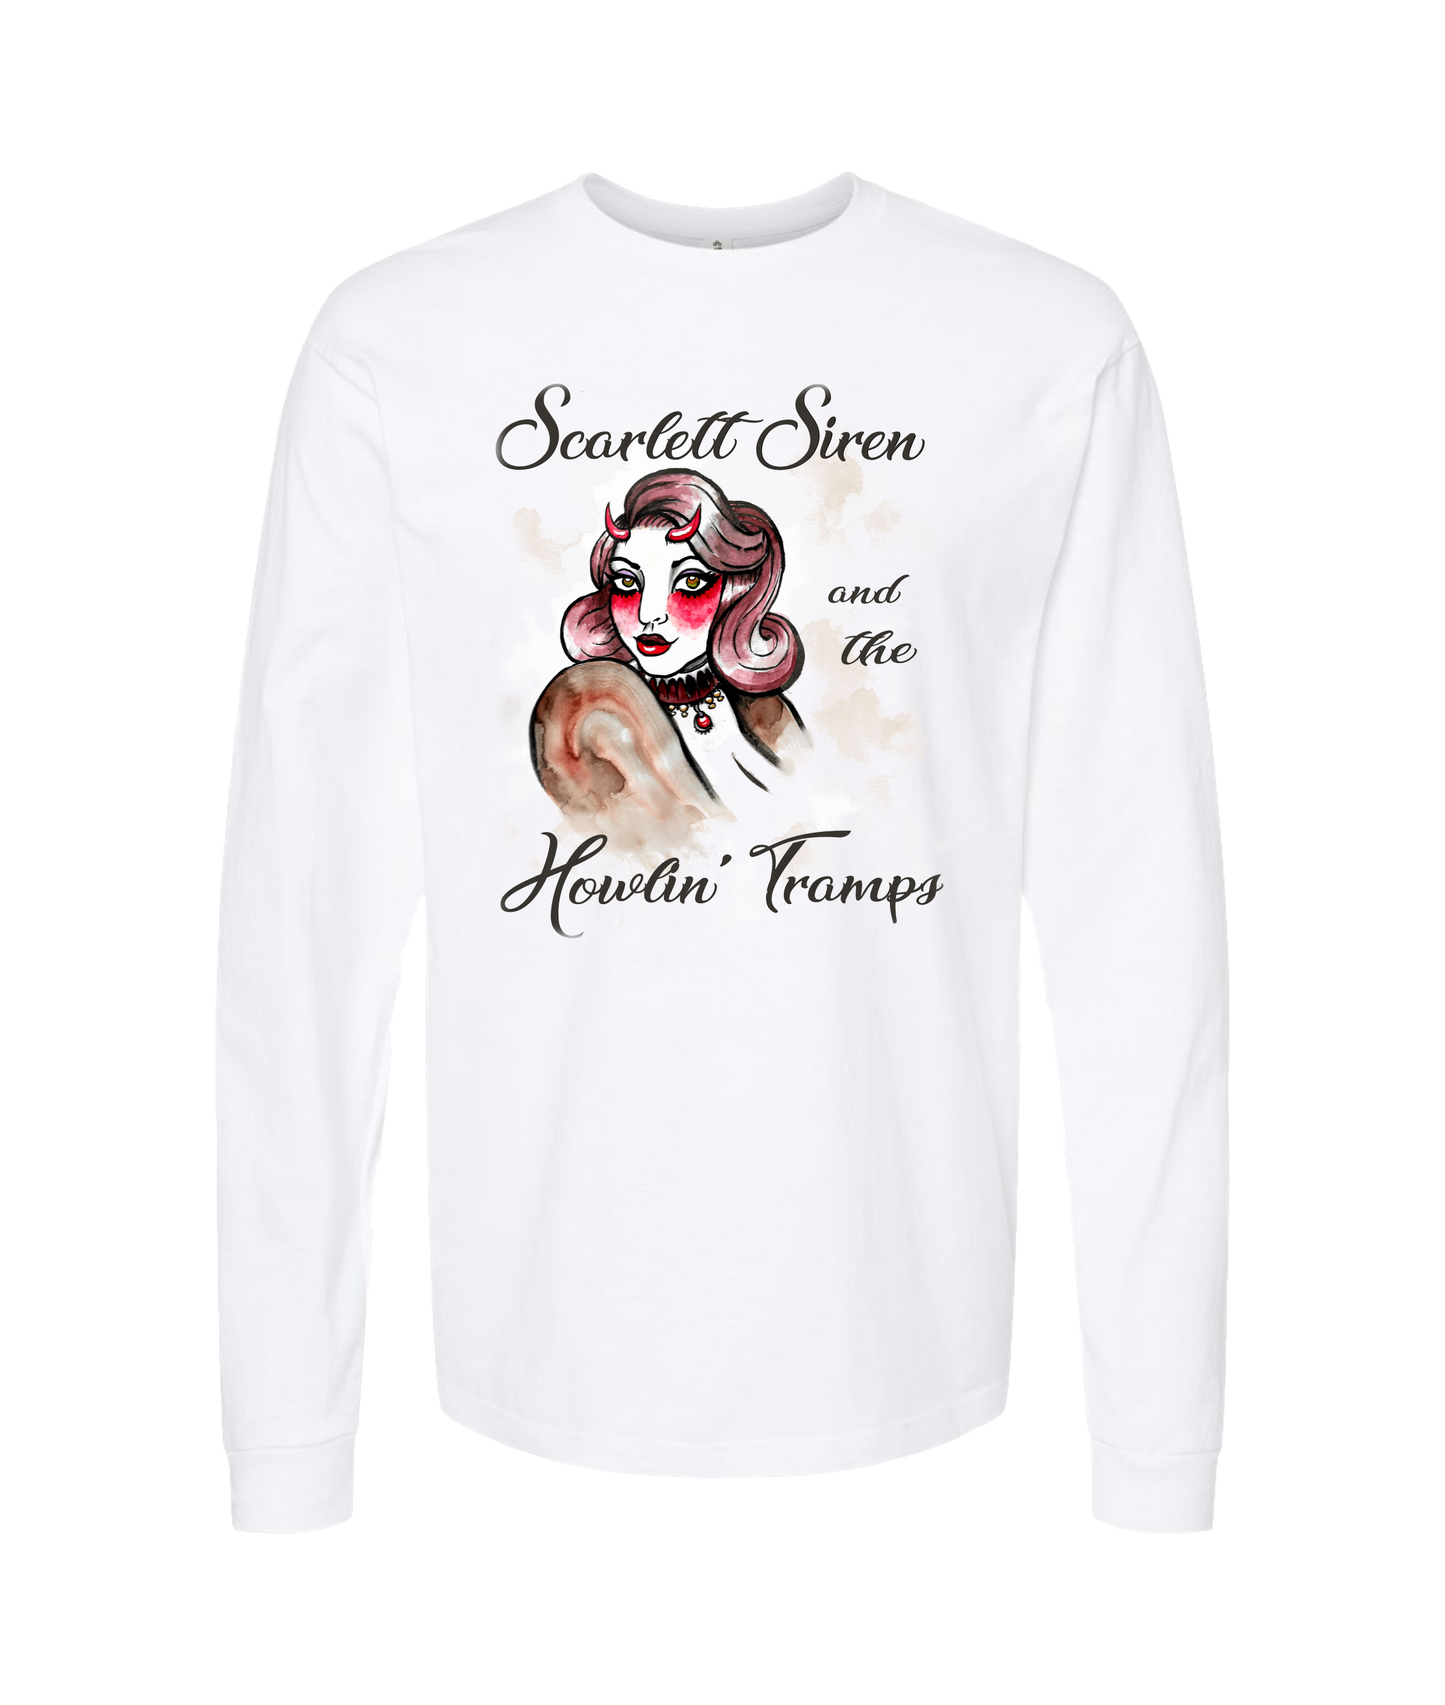 Scarlett Siren & The Howlin' Tramps - Design 2 - White Long Sleeve T